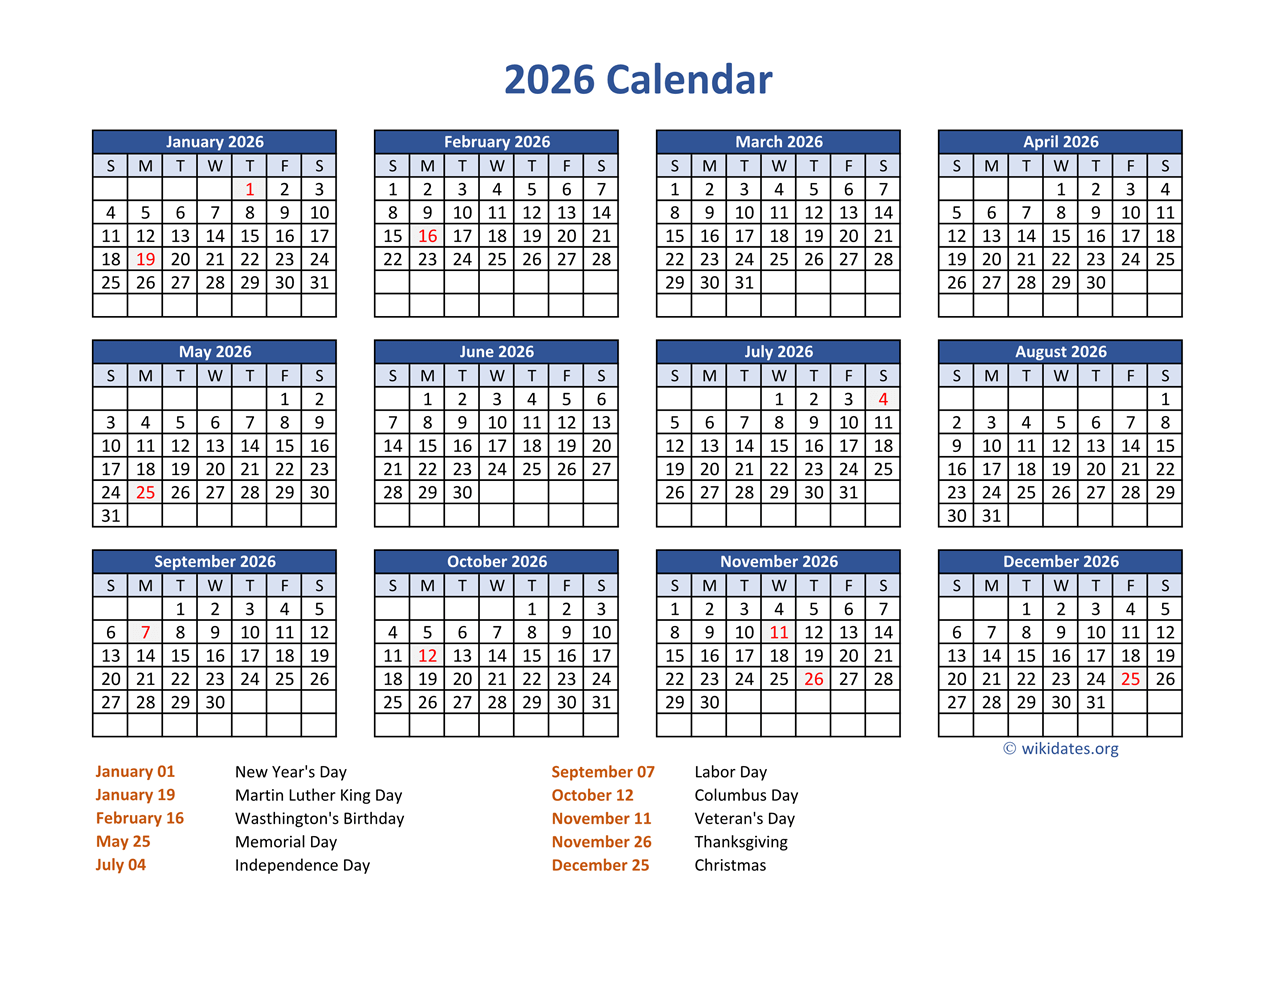 pdf-calendar-2026-with-federal-holidays-wikidates